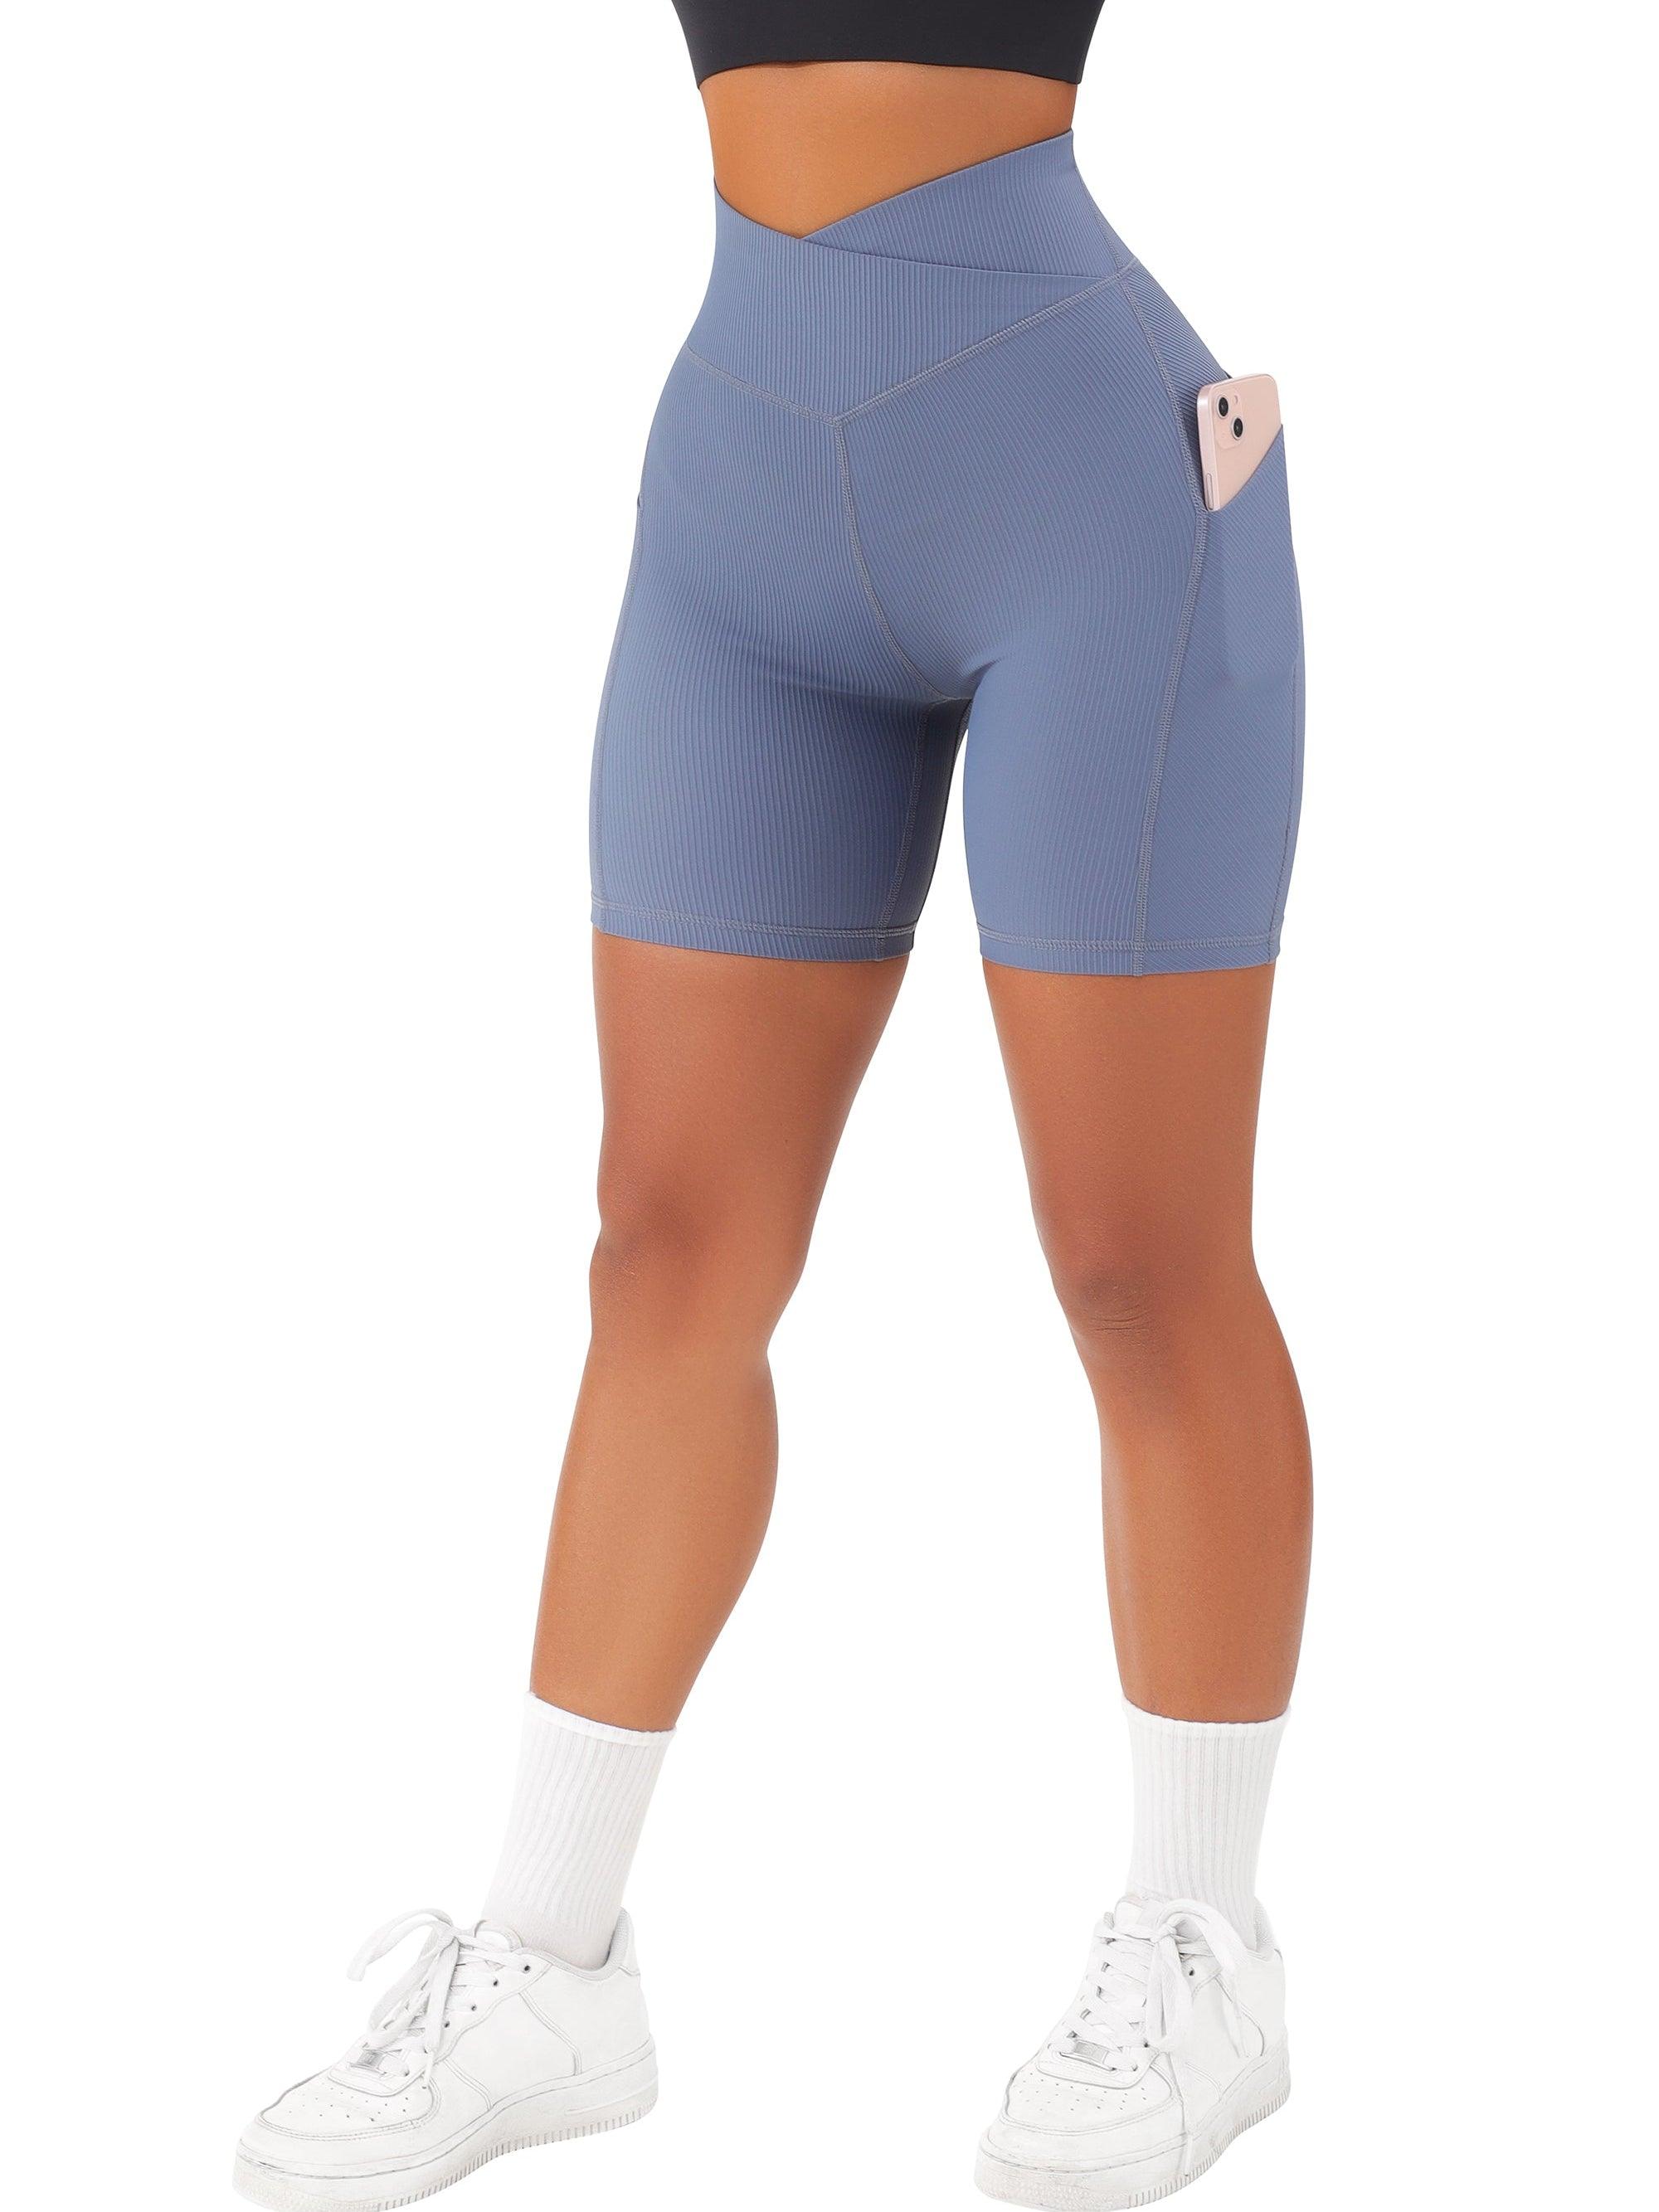 Crossover Sculpt Biker Shorts-Blue-Suuksess Women&#39;s Shorts for Running, Sports, Hiking - Lululemon Dupe, Gymshark Dupe, Fabletics Dupe